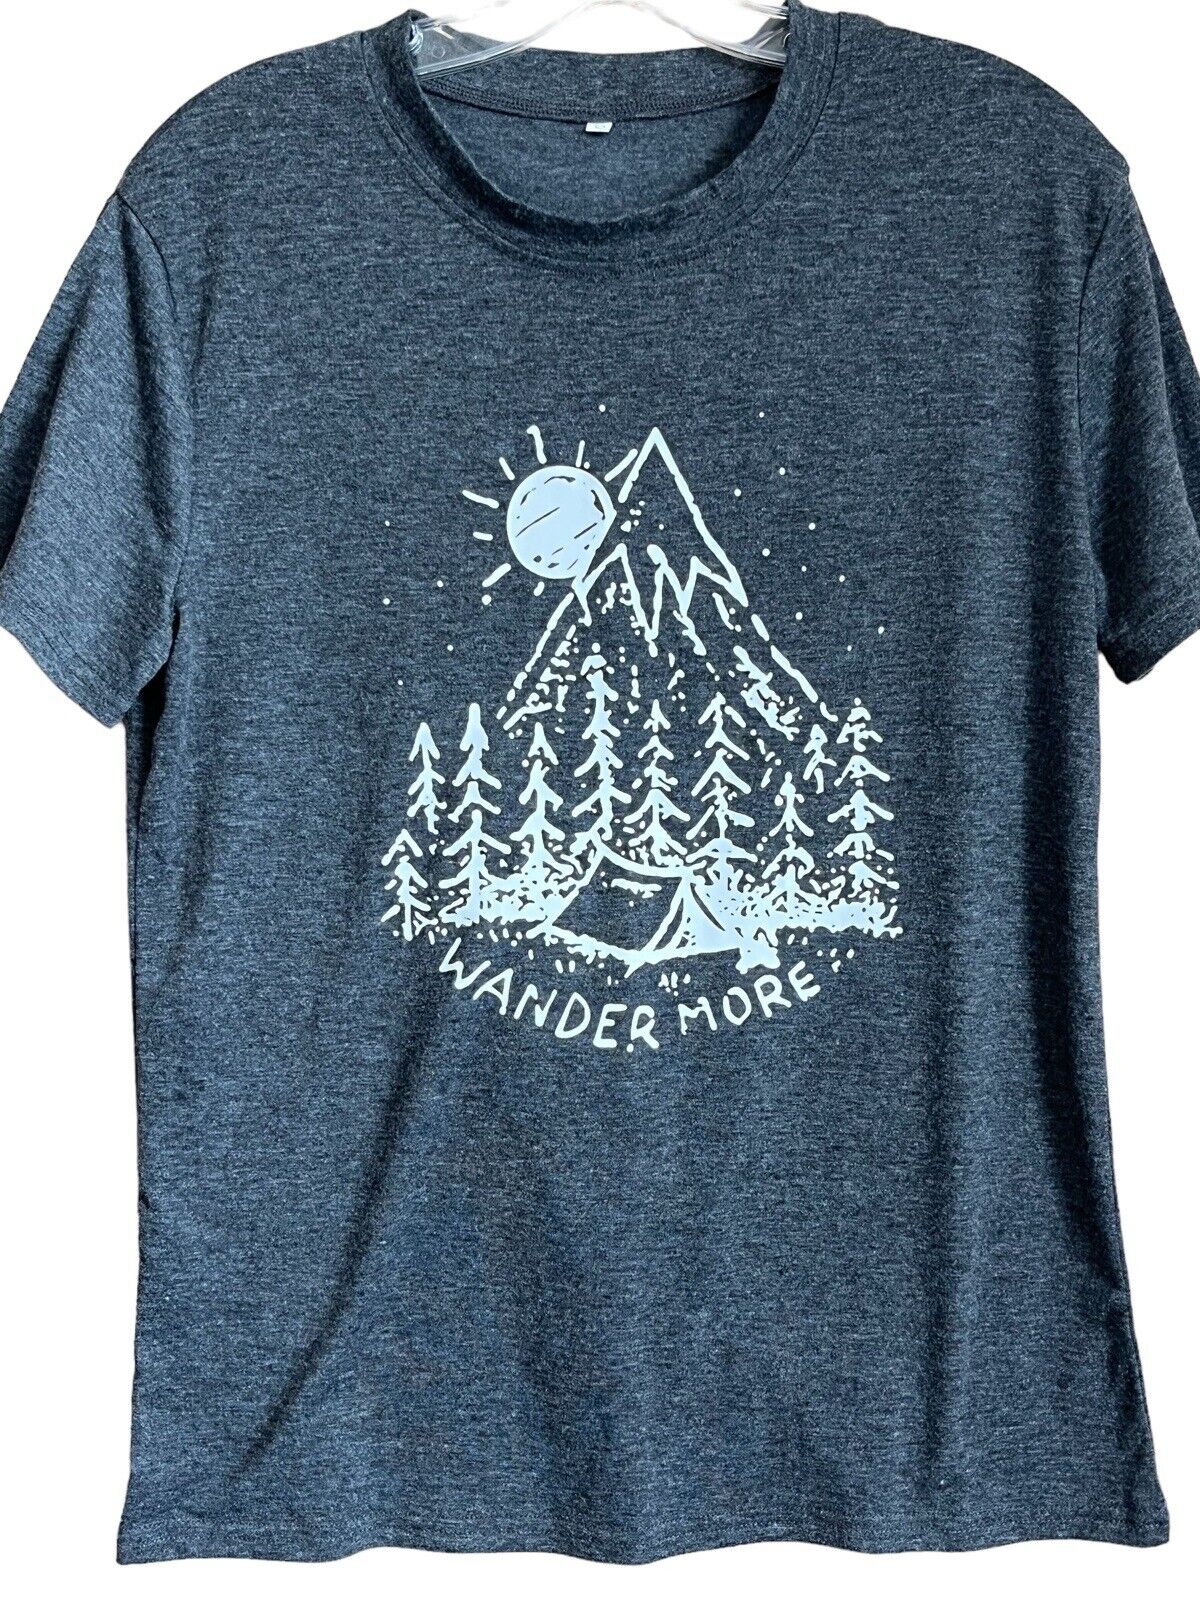 Wander More T Shirt Womens Small Med Dark Gray Camping Outdoors Mountain Hiking